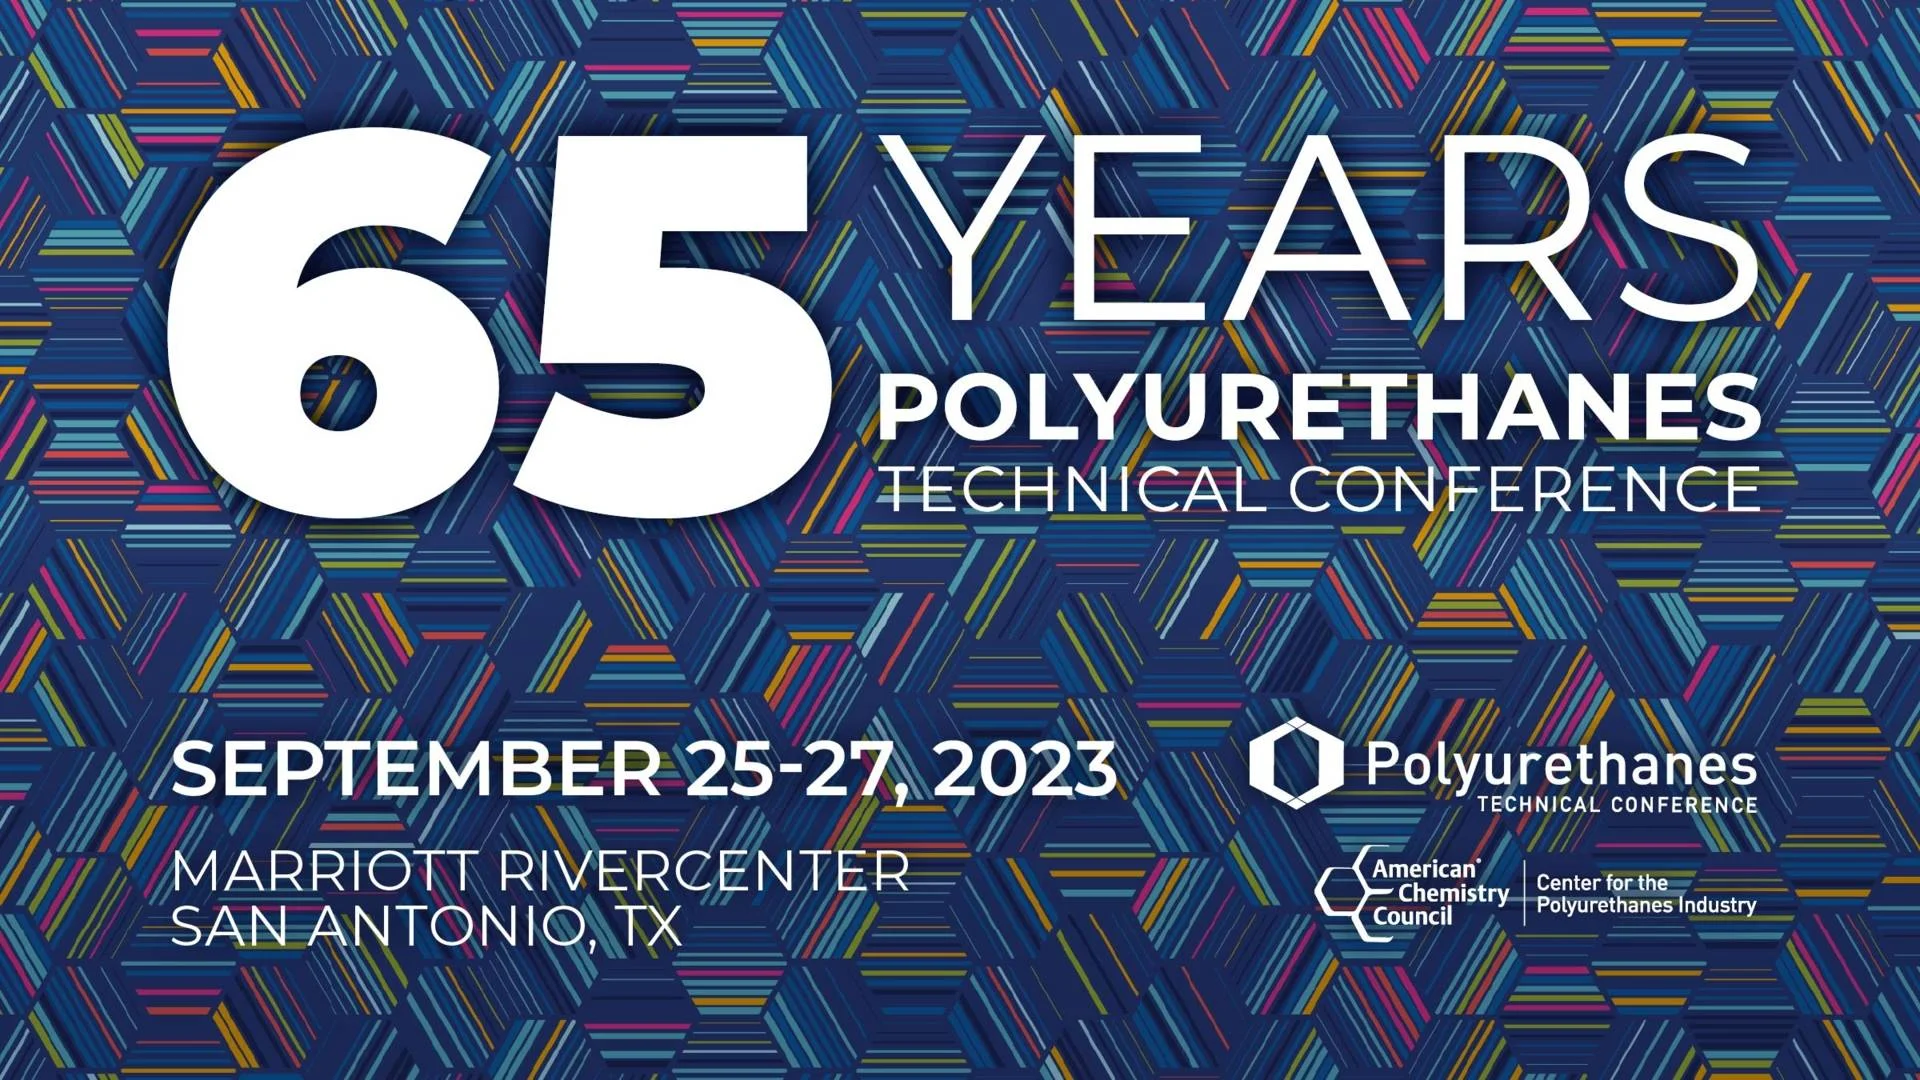 65 Years Polyurethanes Technical Conference September 25-27, 2023 San Antonio, Texas